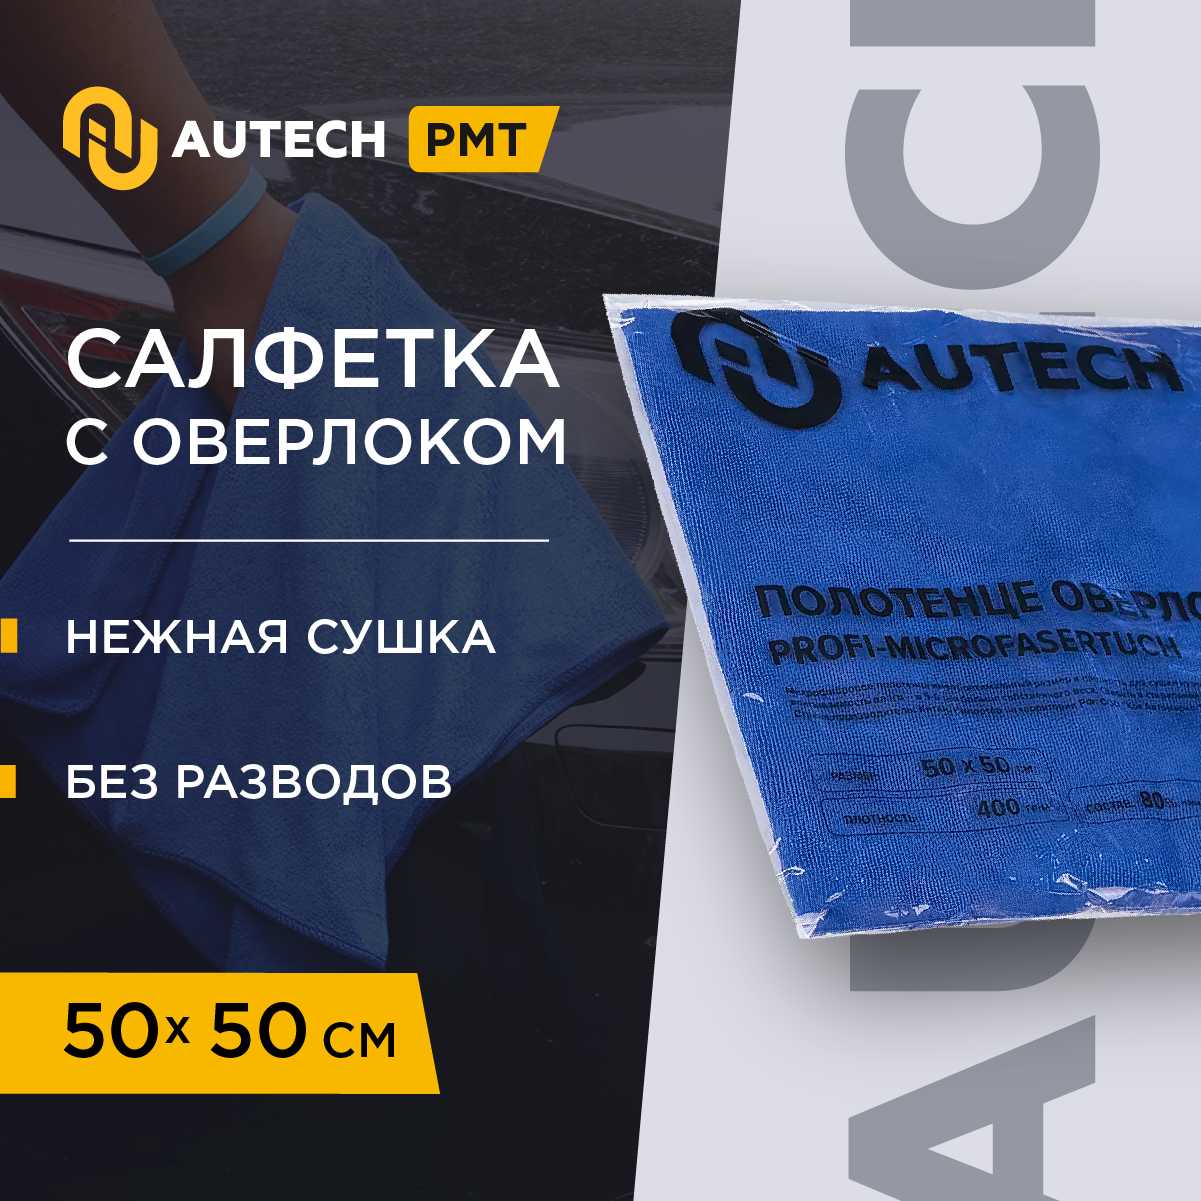 AuTech | PROFI-MICROFASERTUCH - Автополотенце , микрофибра для сушки авто. 50*50 см